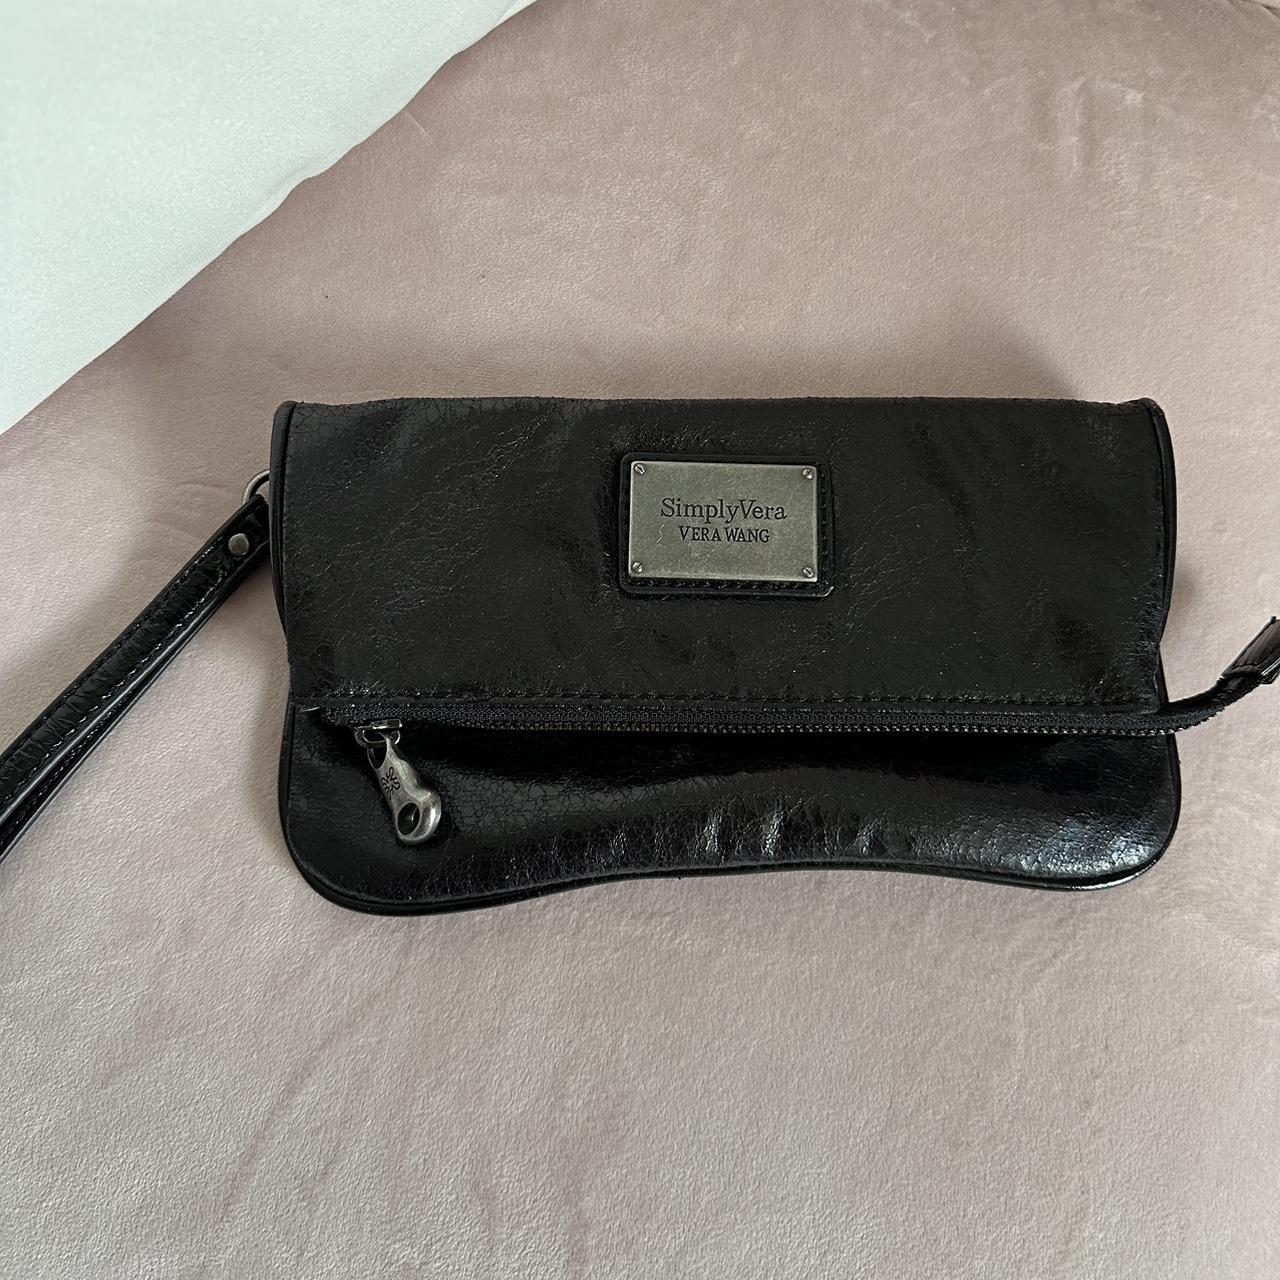 Simply Vera Vera Wang Purse Large Handbag Tan 3 Compartments | eBay